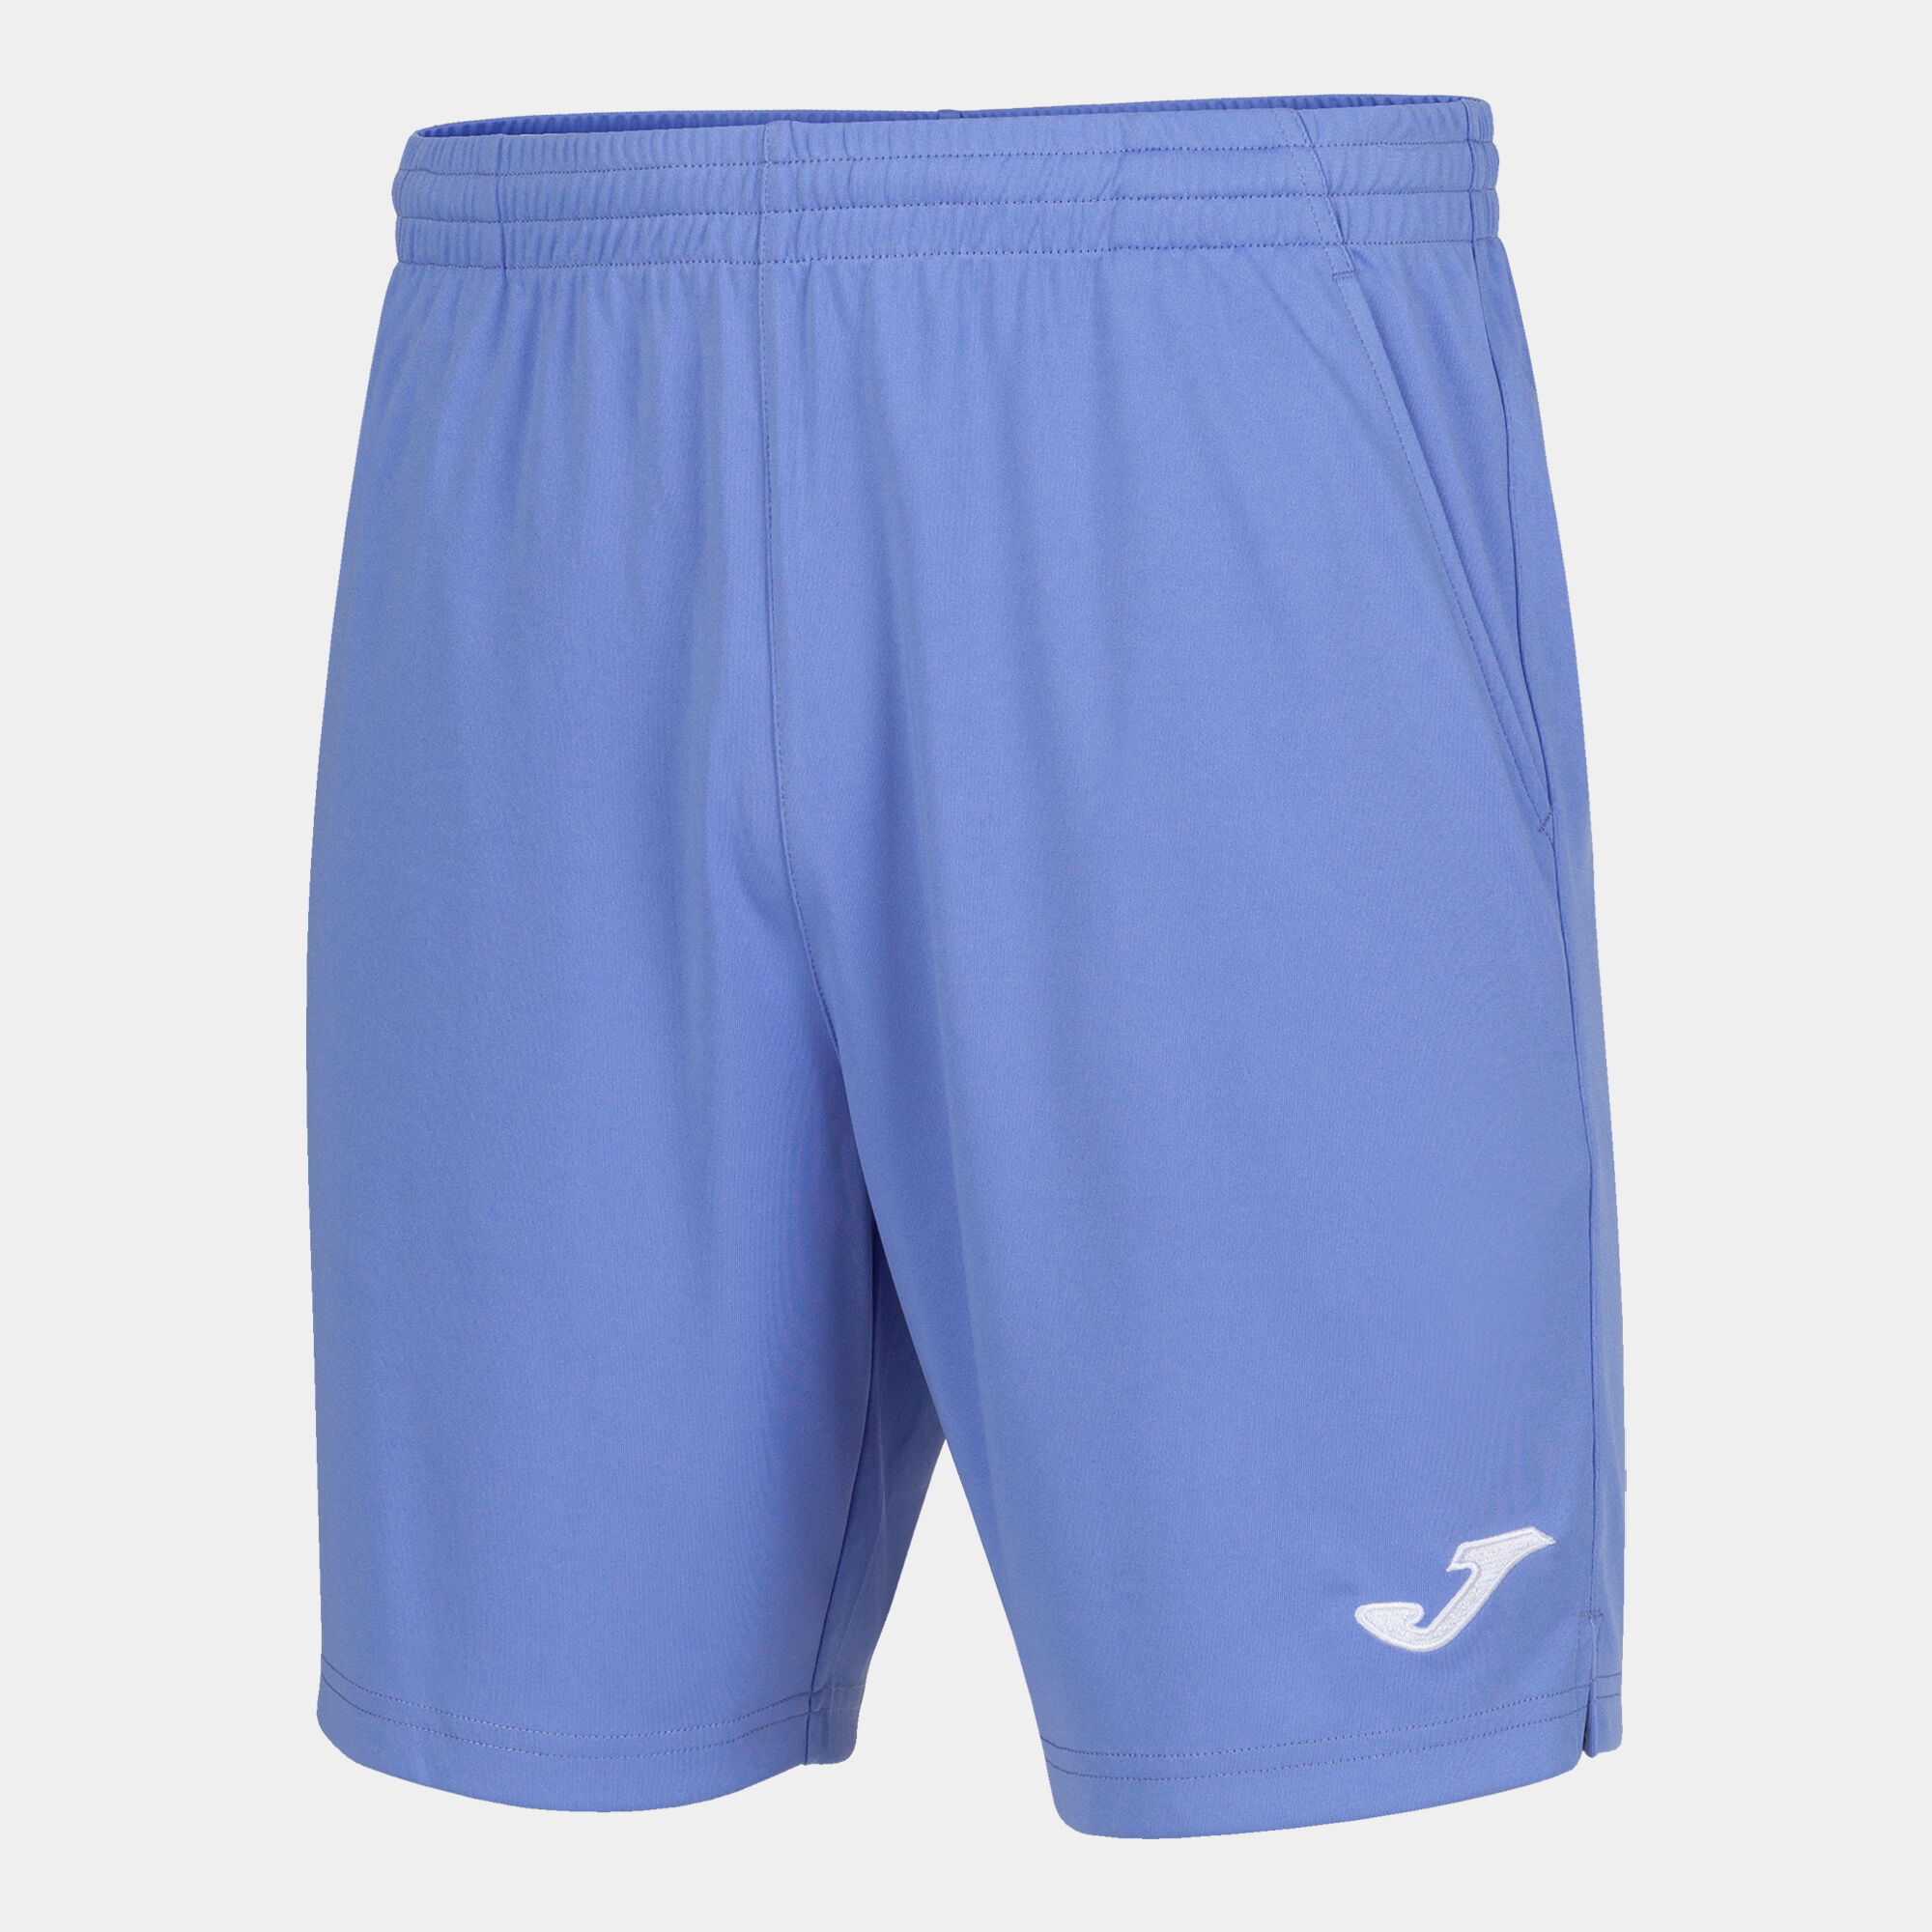 Bermuda shorts man Drive blue